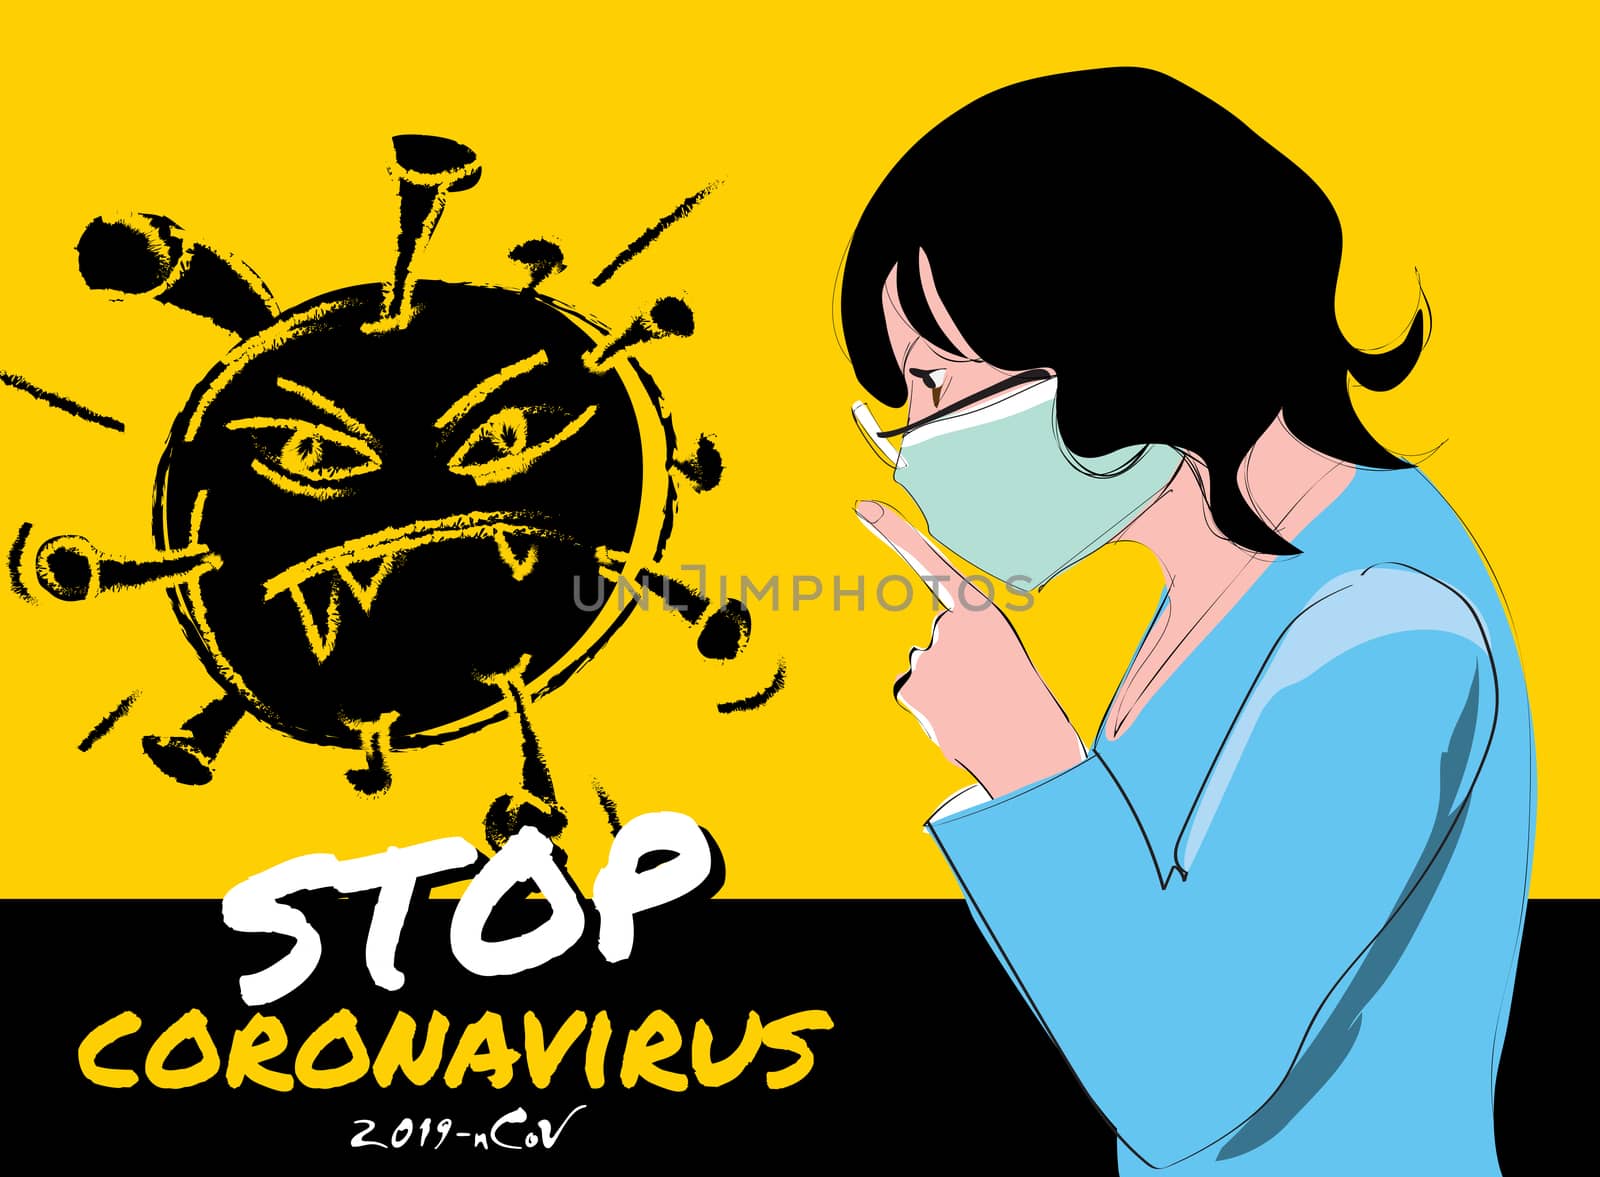 Pandemic Stop. Novel Coronavirus outbreak covid-19 2019-nCoV by SlayCer